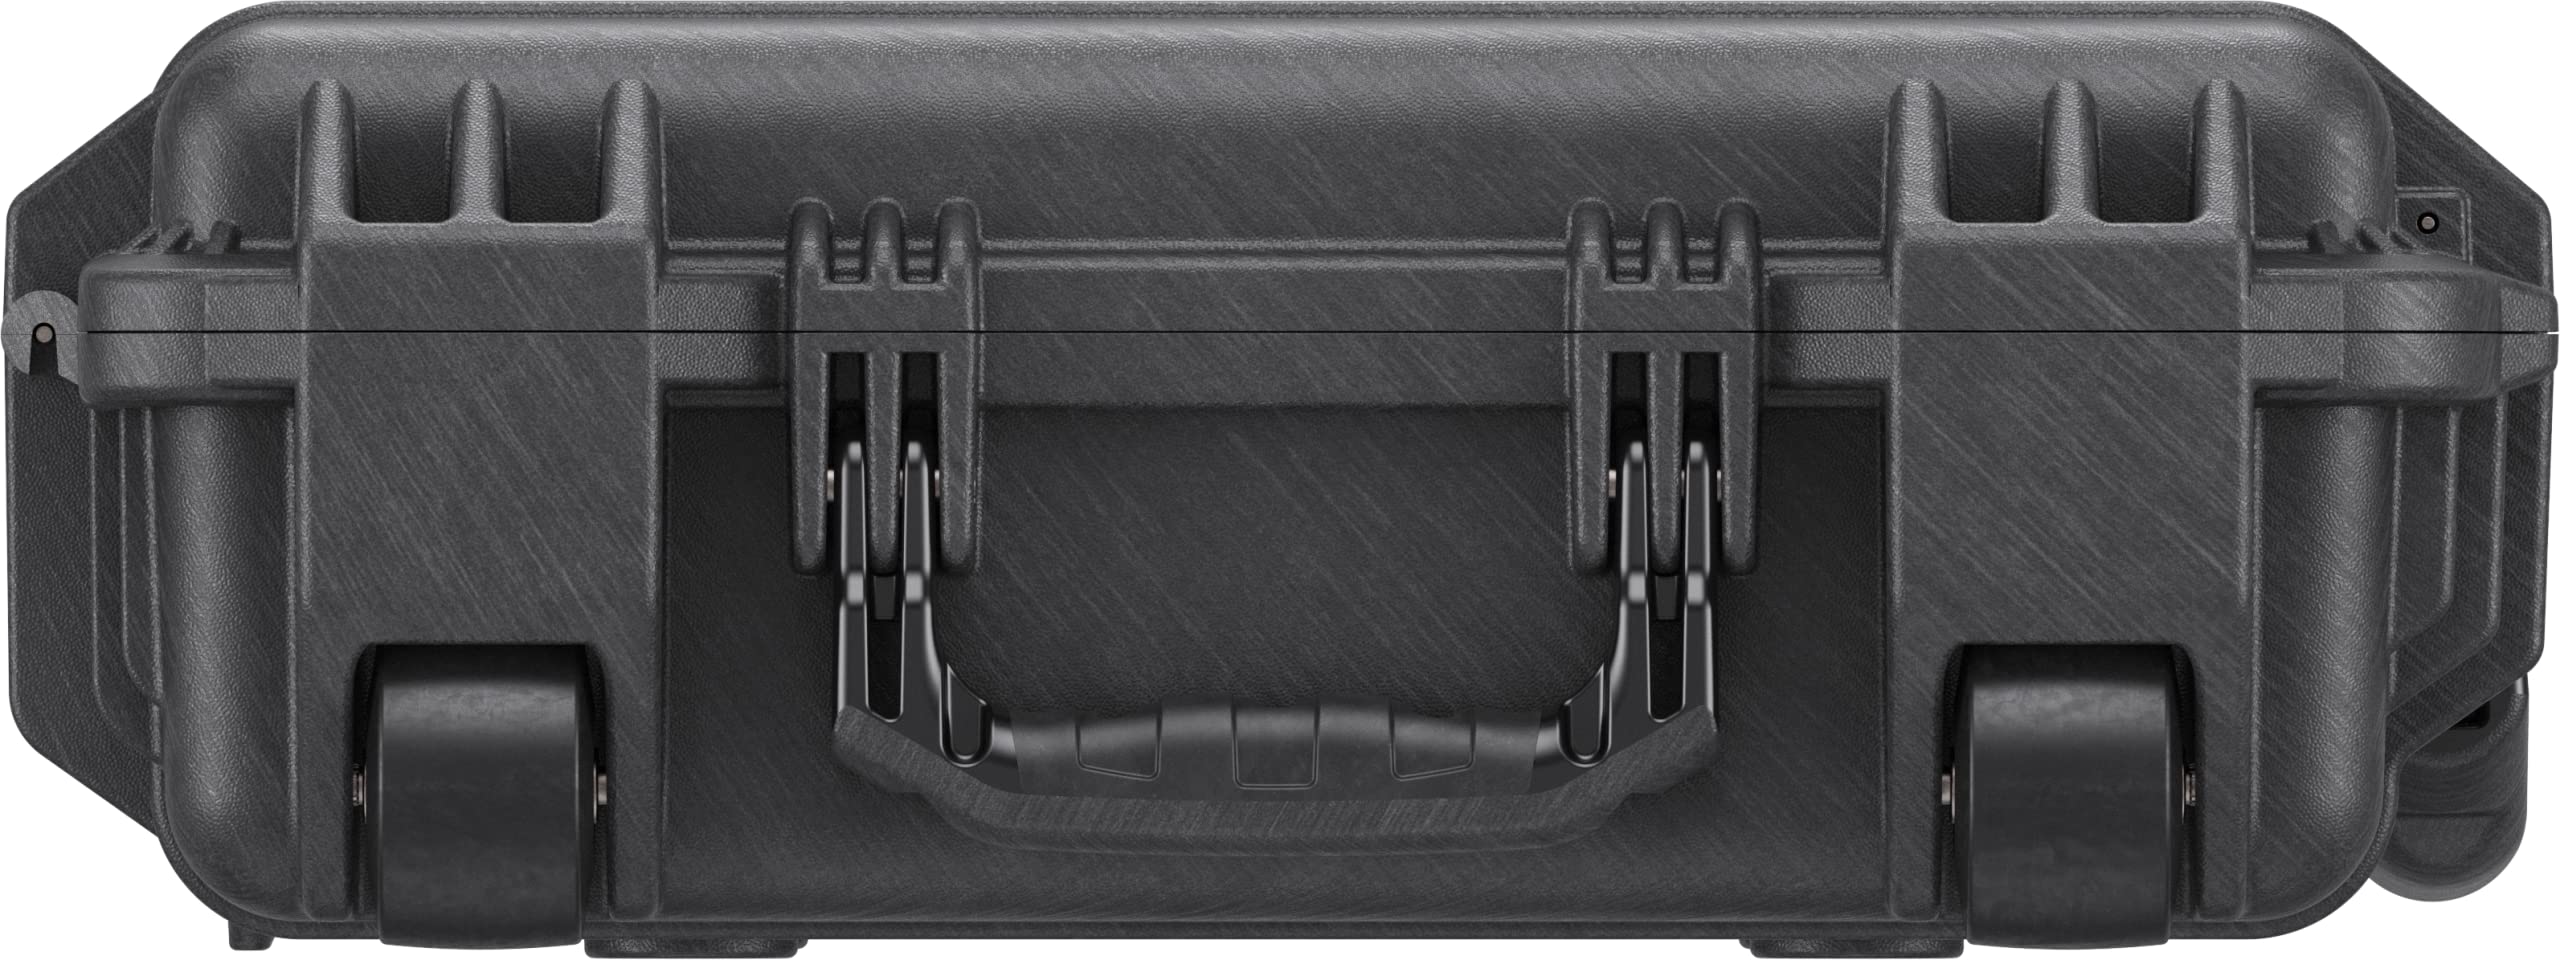 Pelican Protector 1720 Long Case - Multi-Purpose Hard Case with Foam - Tripod, Camera Equipment, Sportsmans Gun Case, Electronics Gear, and More (Black)